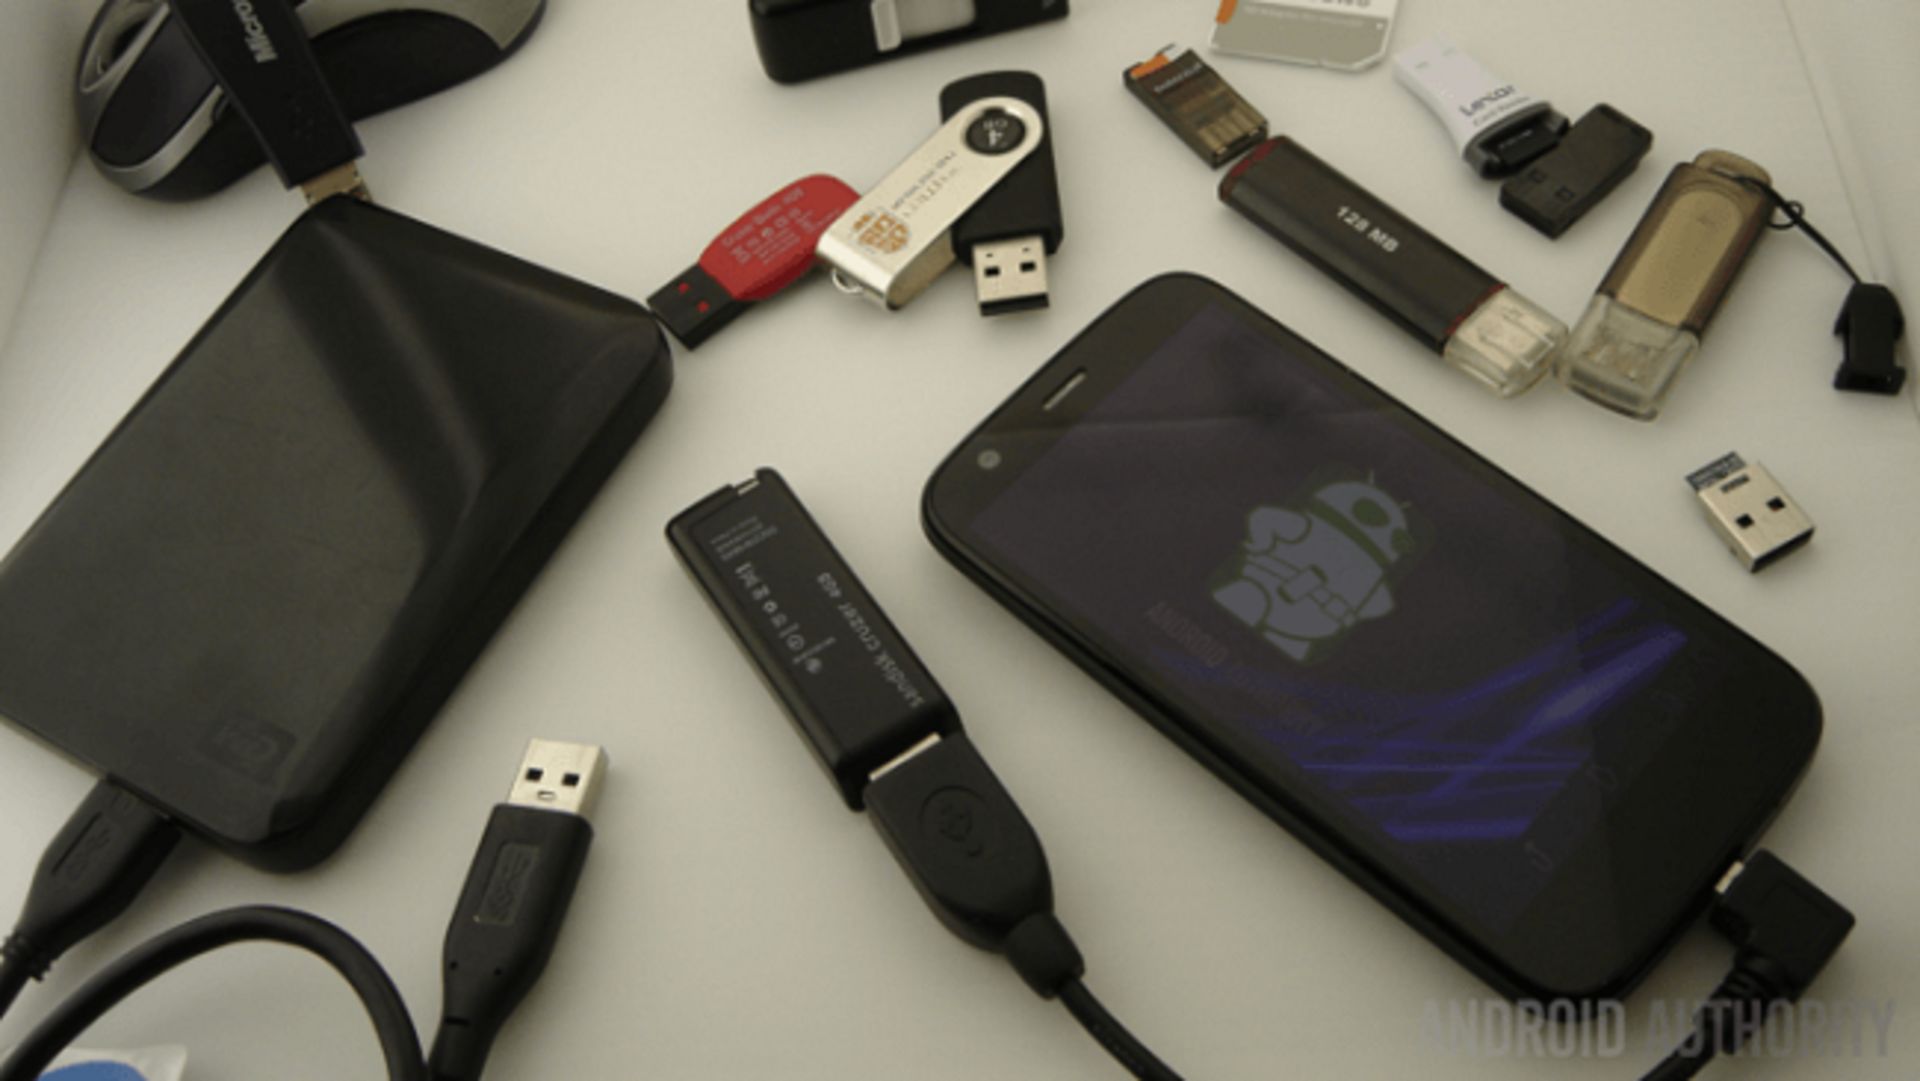 13-Android-USB-OTG-flash-drives